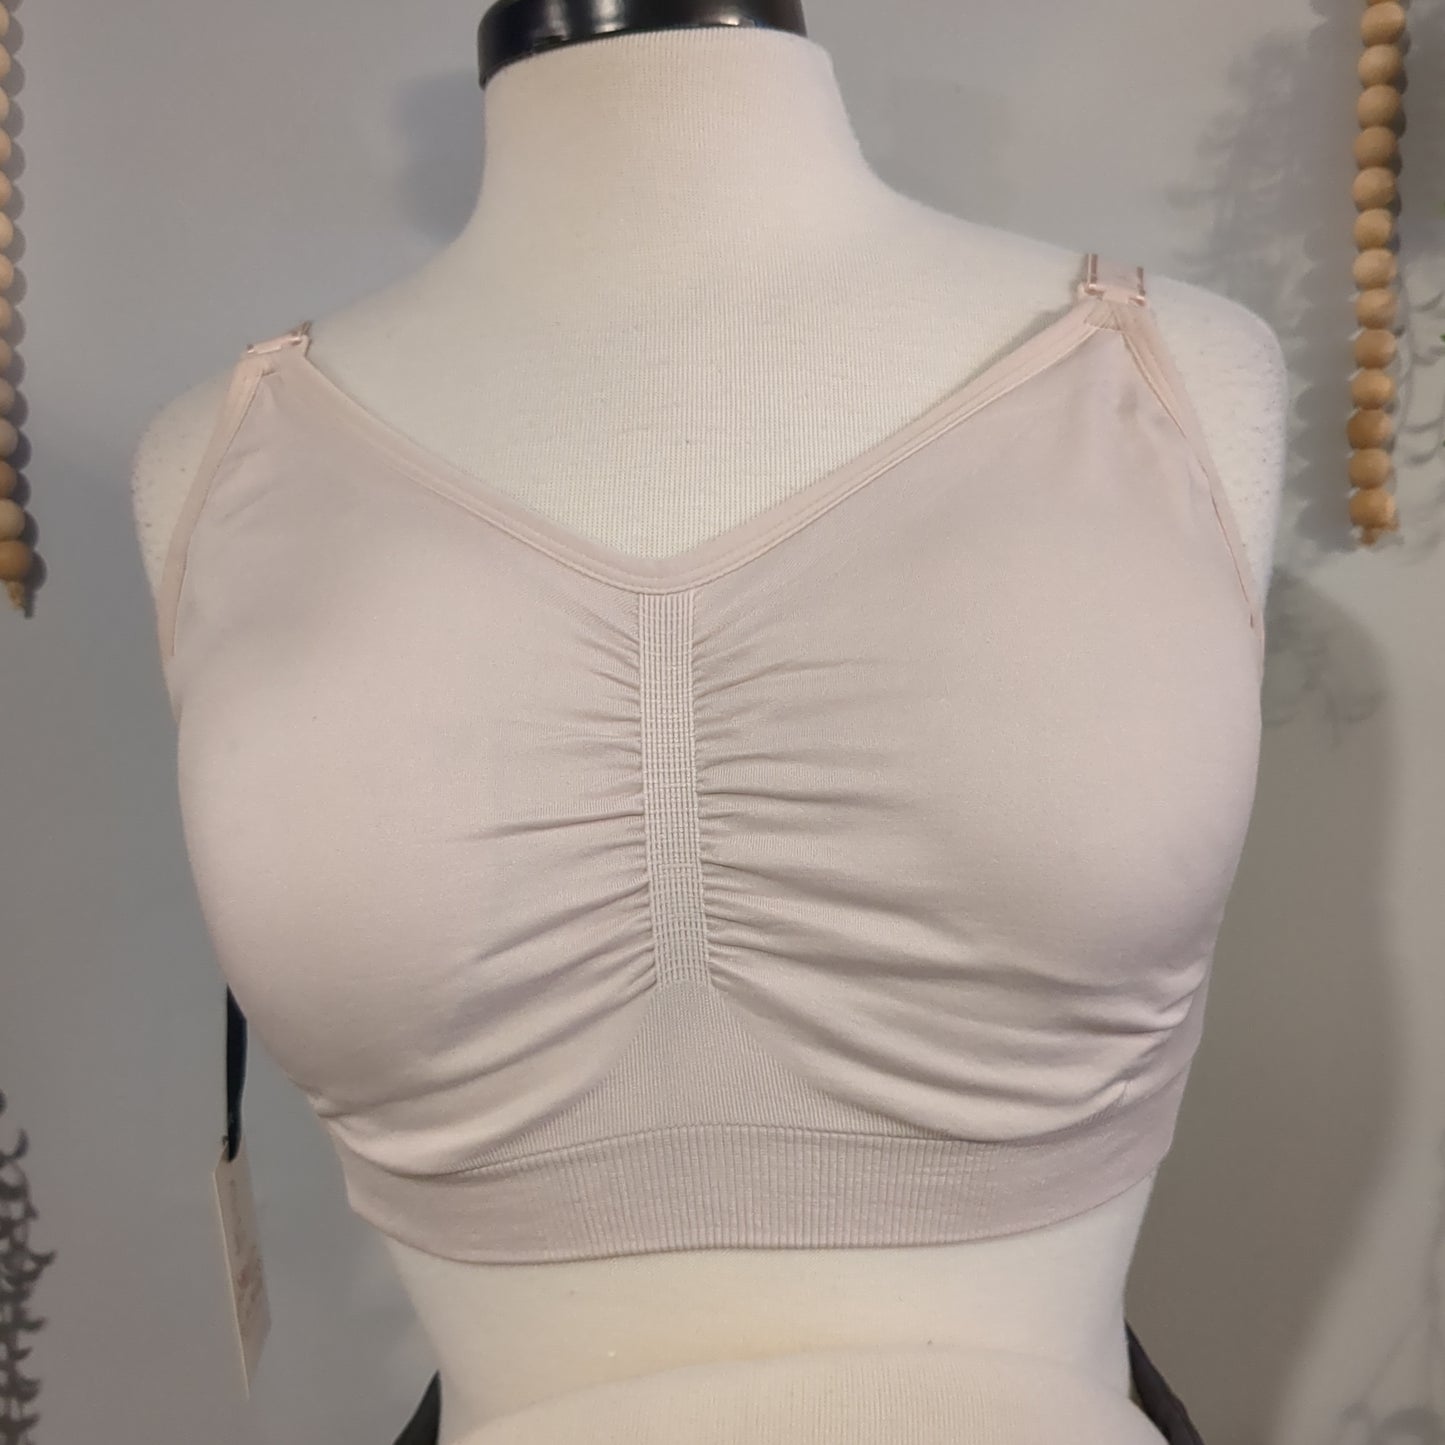 Clasp strap ballet style stretchy nursing bra, Multi